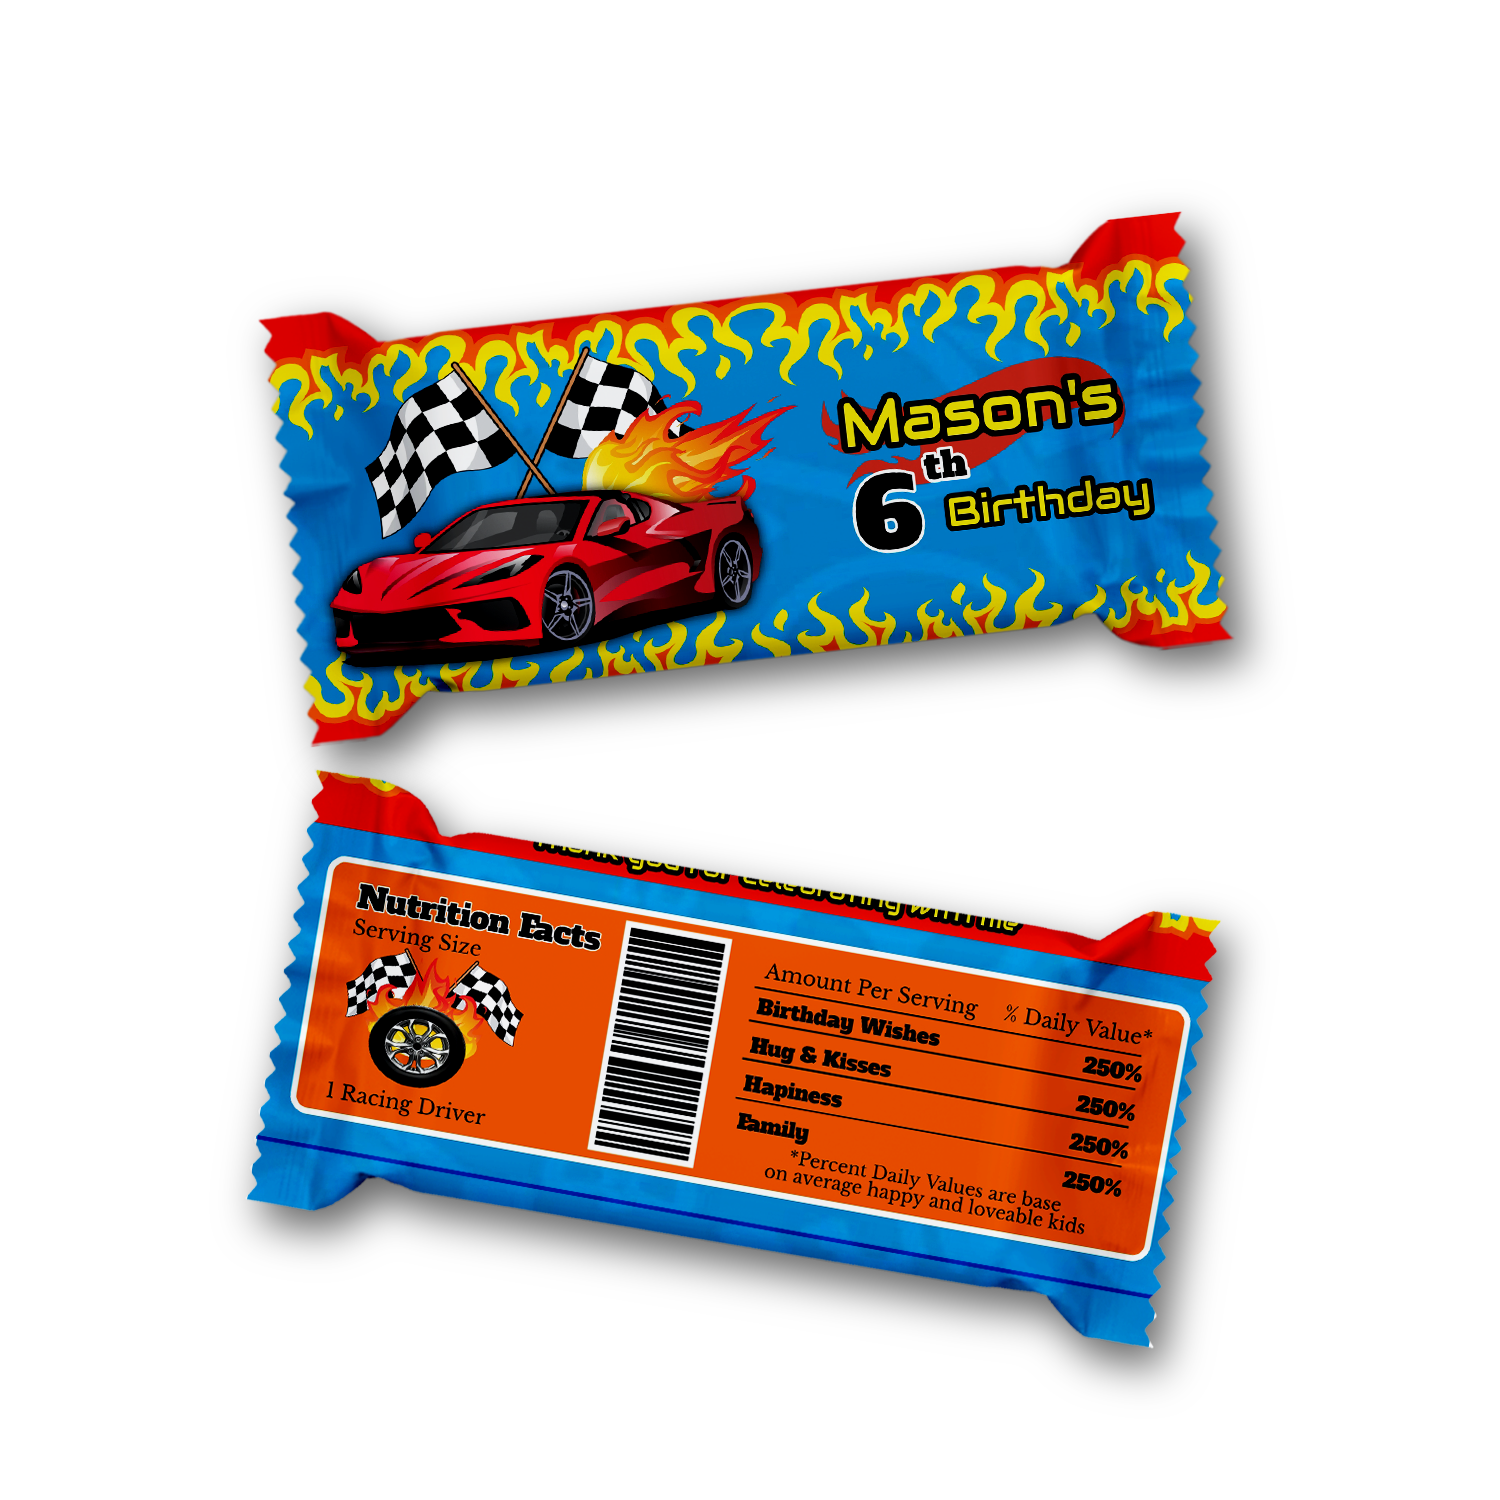 Rice Krispies Treats Label & Candy Bar Label for Race Car, Hotwheels, Nascar Games